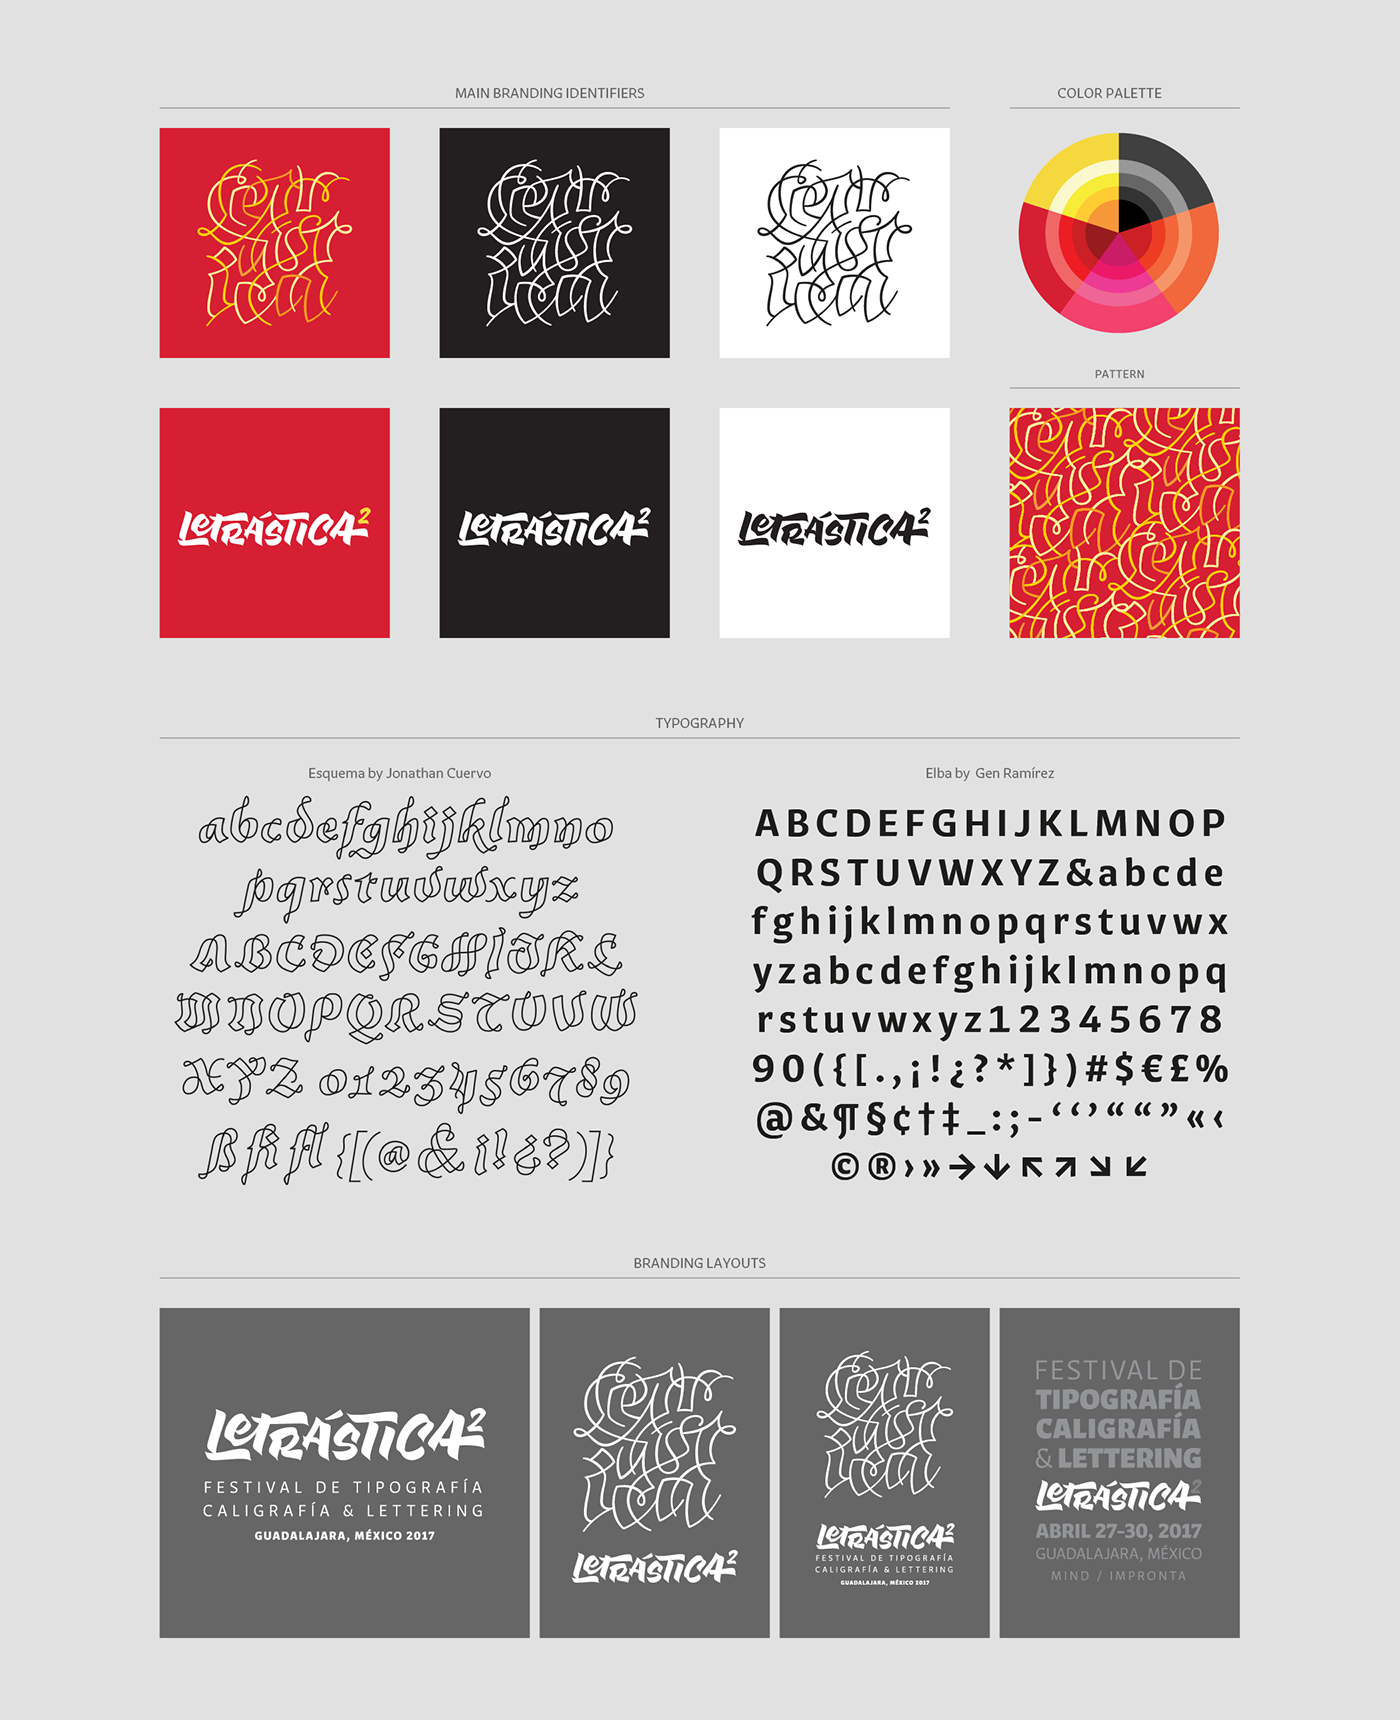 Letrastica branding elements